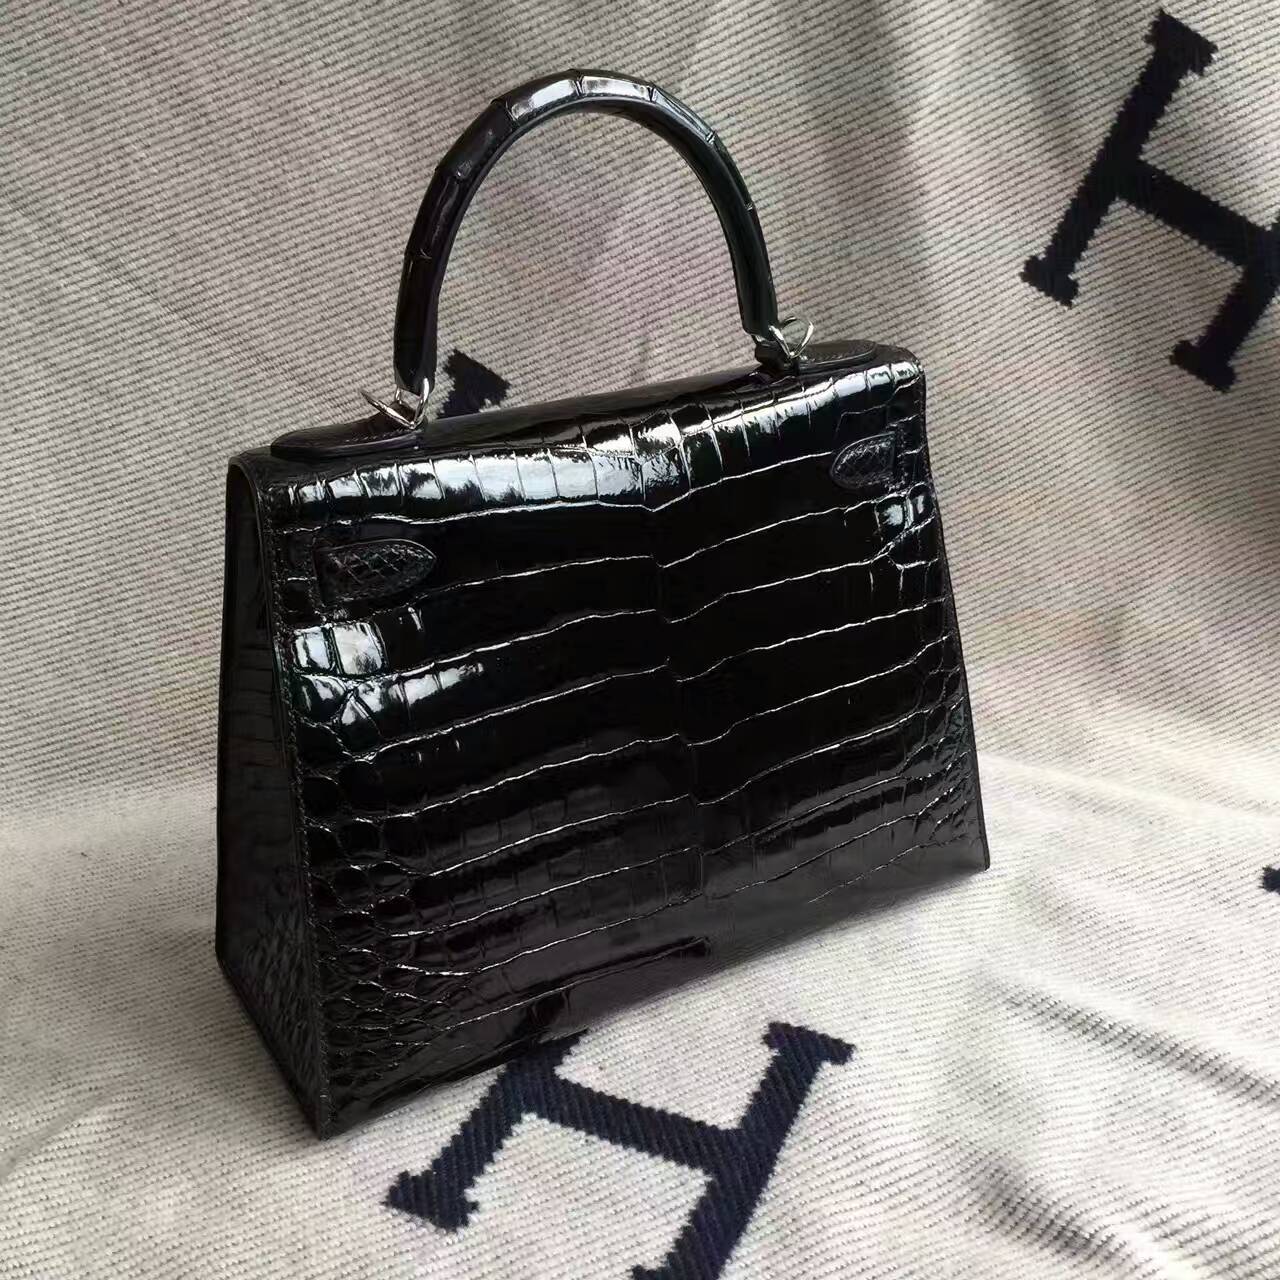 High Quality Hermes CK89 Black Crocodile Shiny Leather Sellier Kelly Bag 28CM